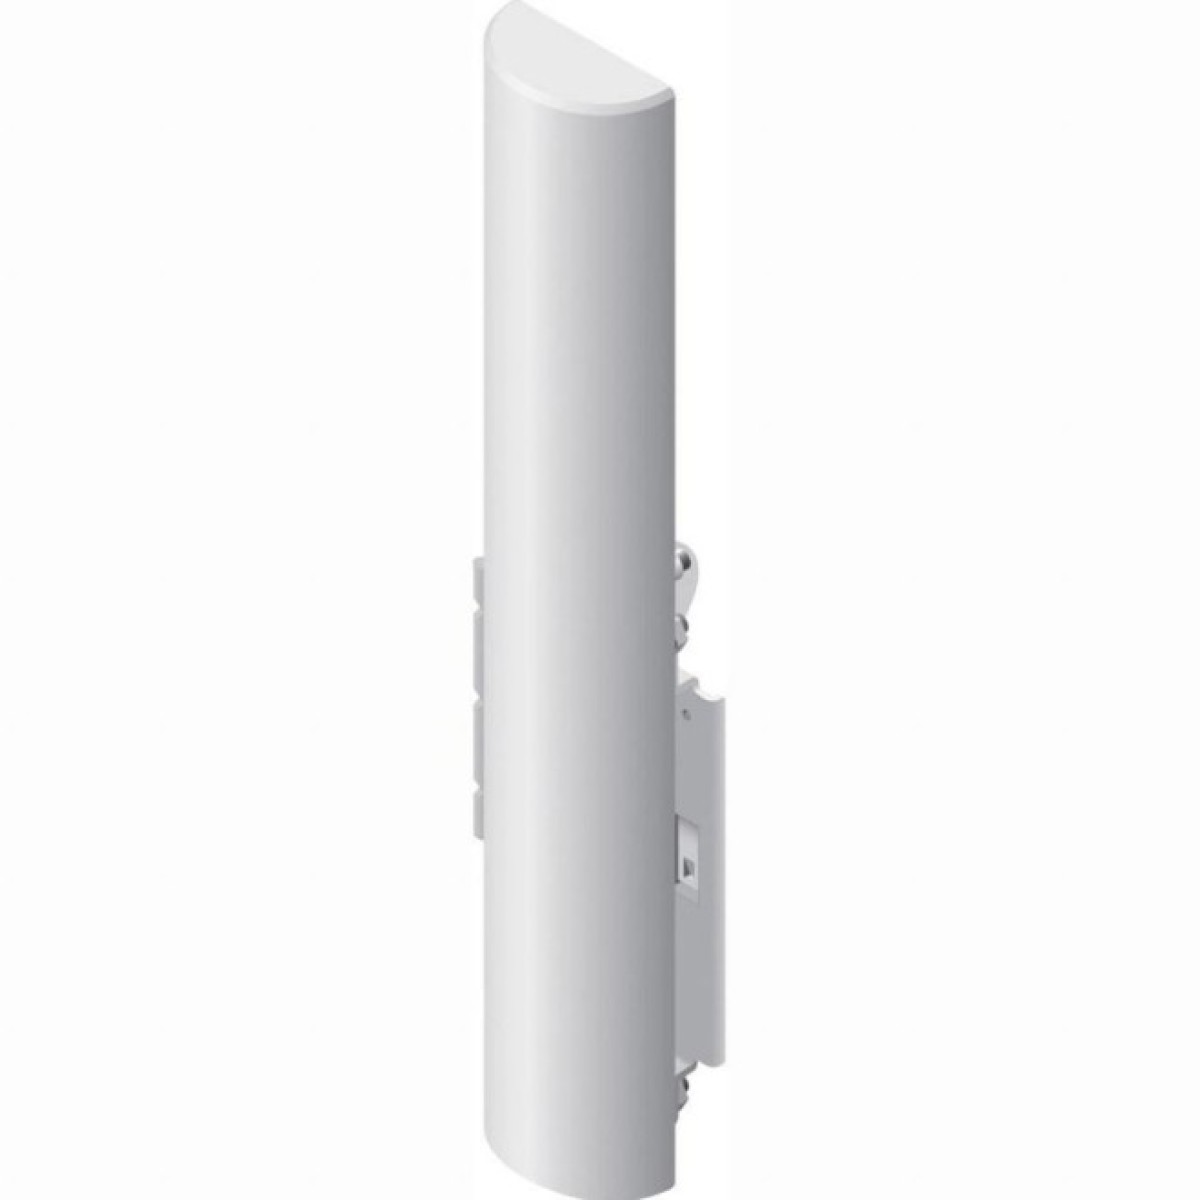 Антенна Ubiquiti sector antenna AirMax MIMO 16dBi 5GHz, 120°, rocket kit (AM-5G16-120) 256_256.jpg